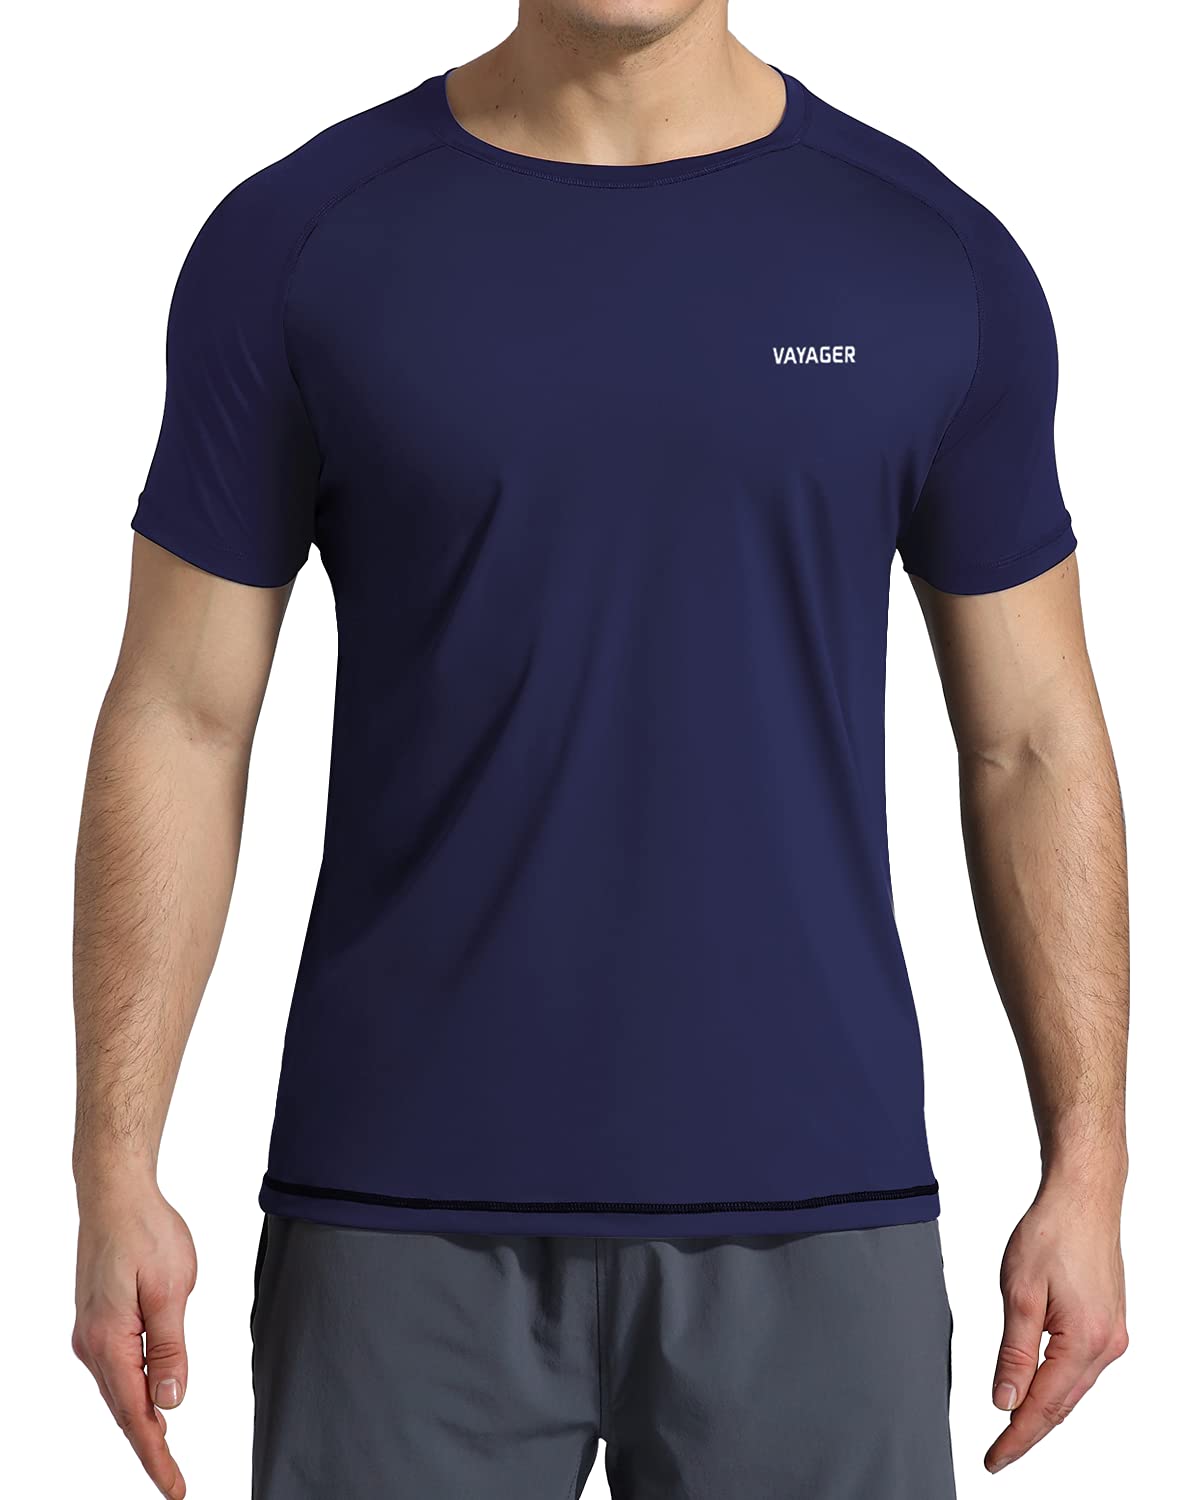 VAYAGER Men's Swim Shirts Rash Guard UPF 50+ T Shirts Quick Dry Loose Fit Water Surfing Shirt(Navy-L) - Opticdeals